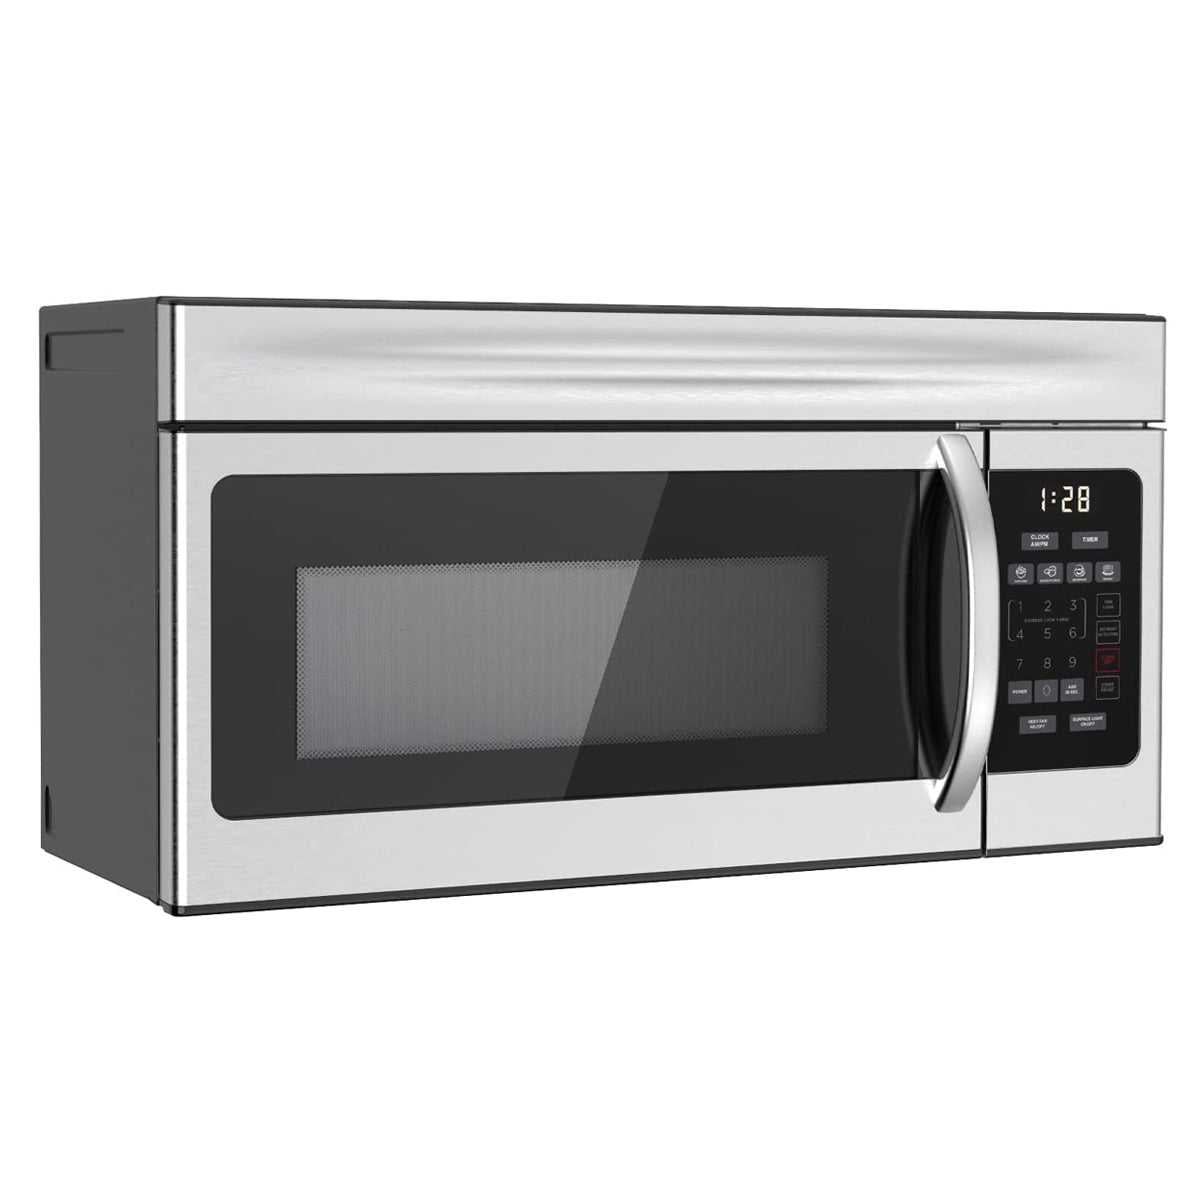 OTR Microwave Oven-OTR1603SN-GASLAND Chef